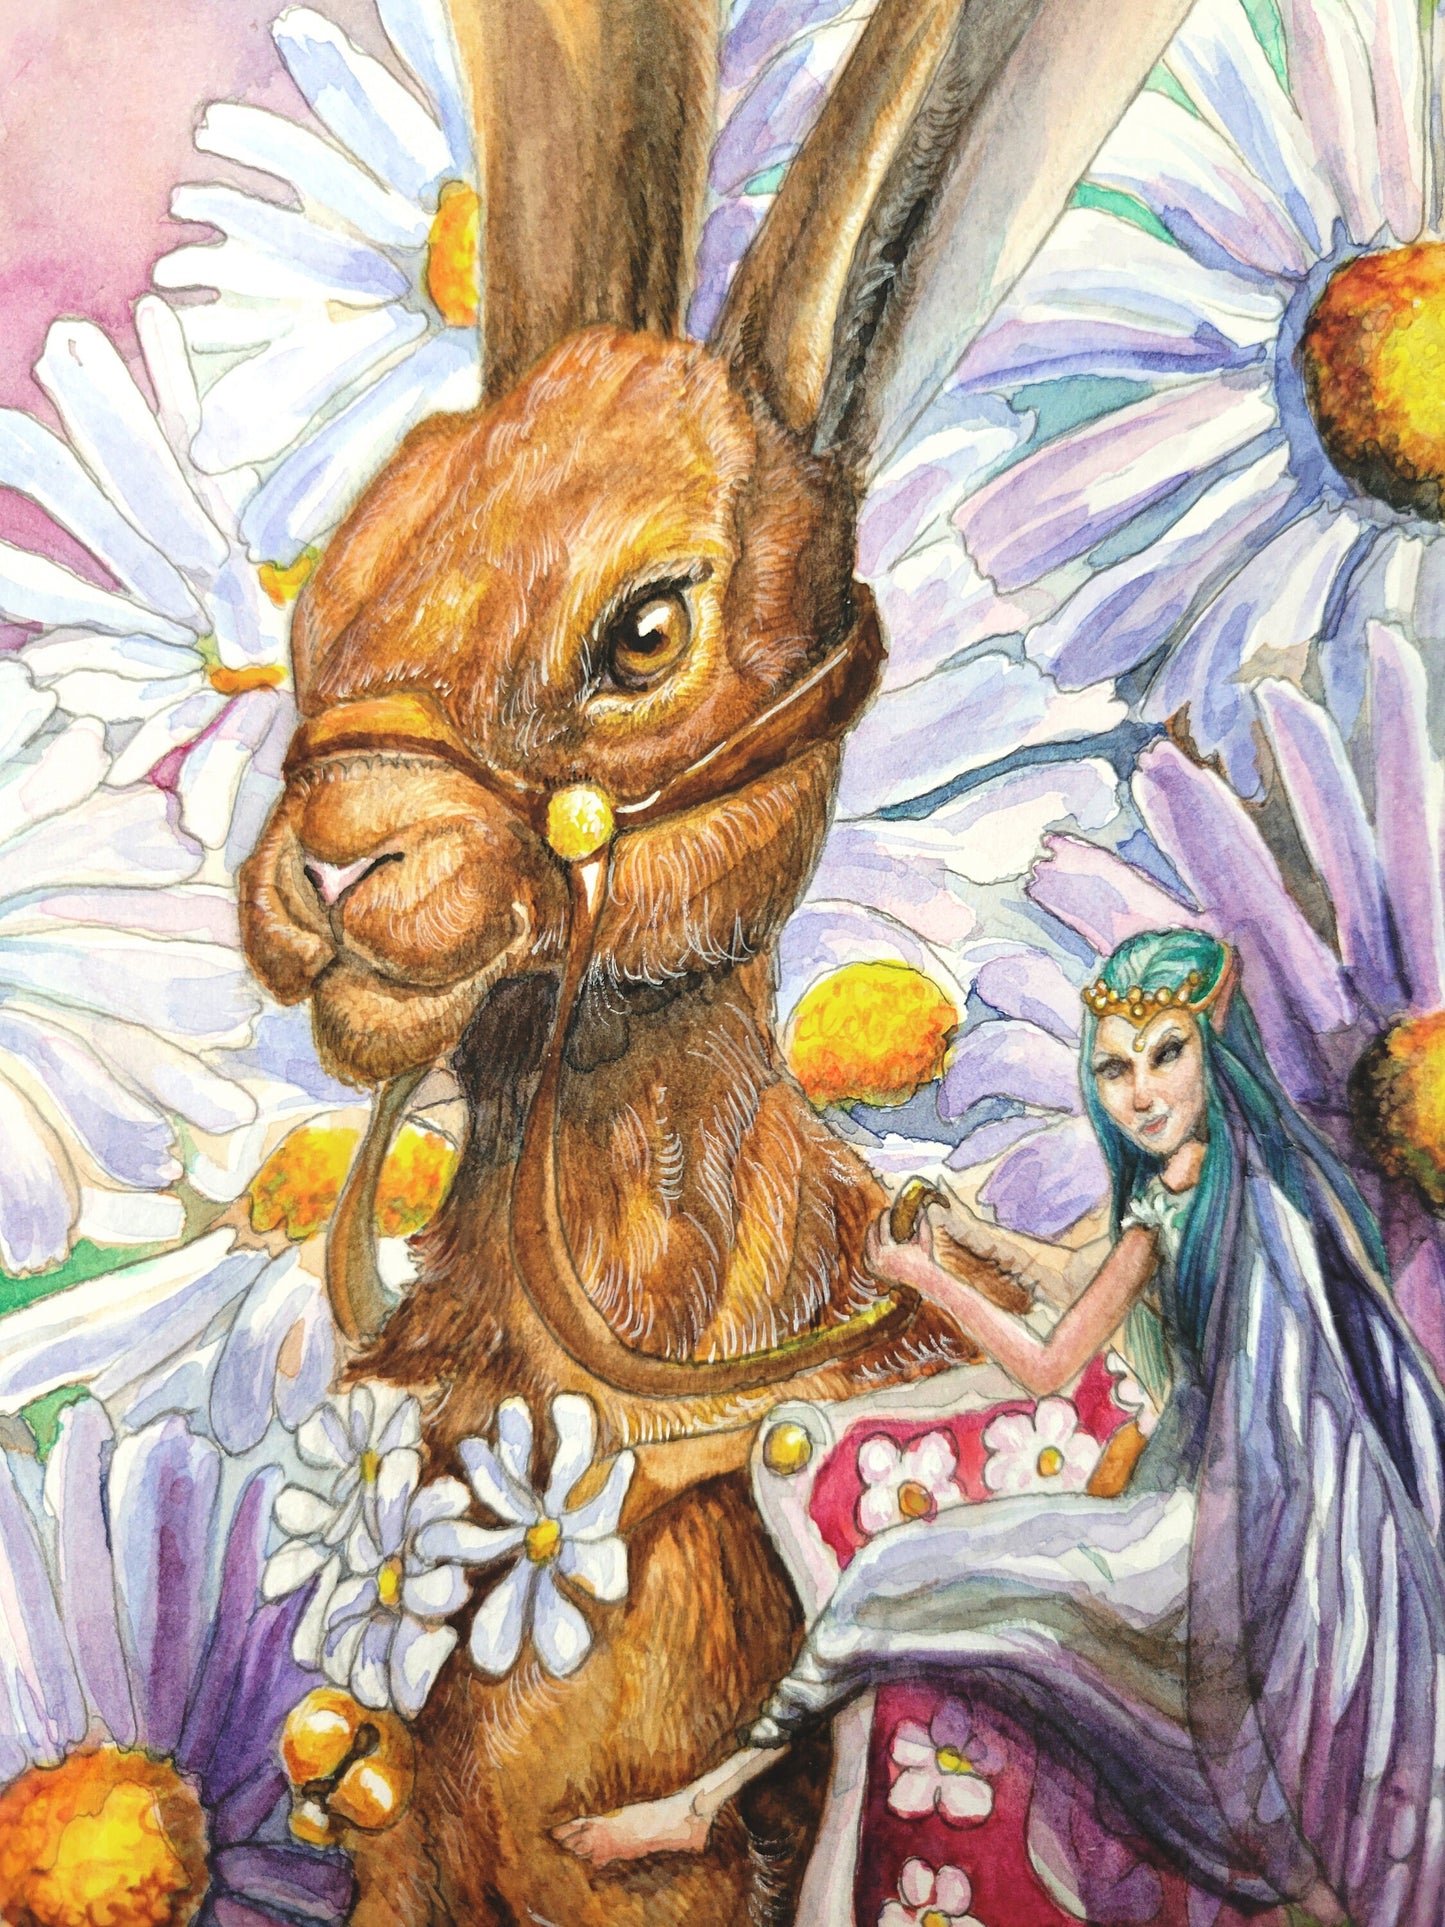 Fantasy Art Print. Daisy Bunny Rider. Gift for Her. Faery/Fairy Garden. Home Decor. fantasy forest. Rabbits. Fantasy Forest